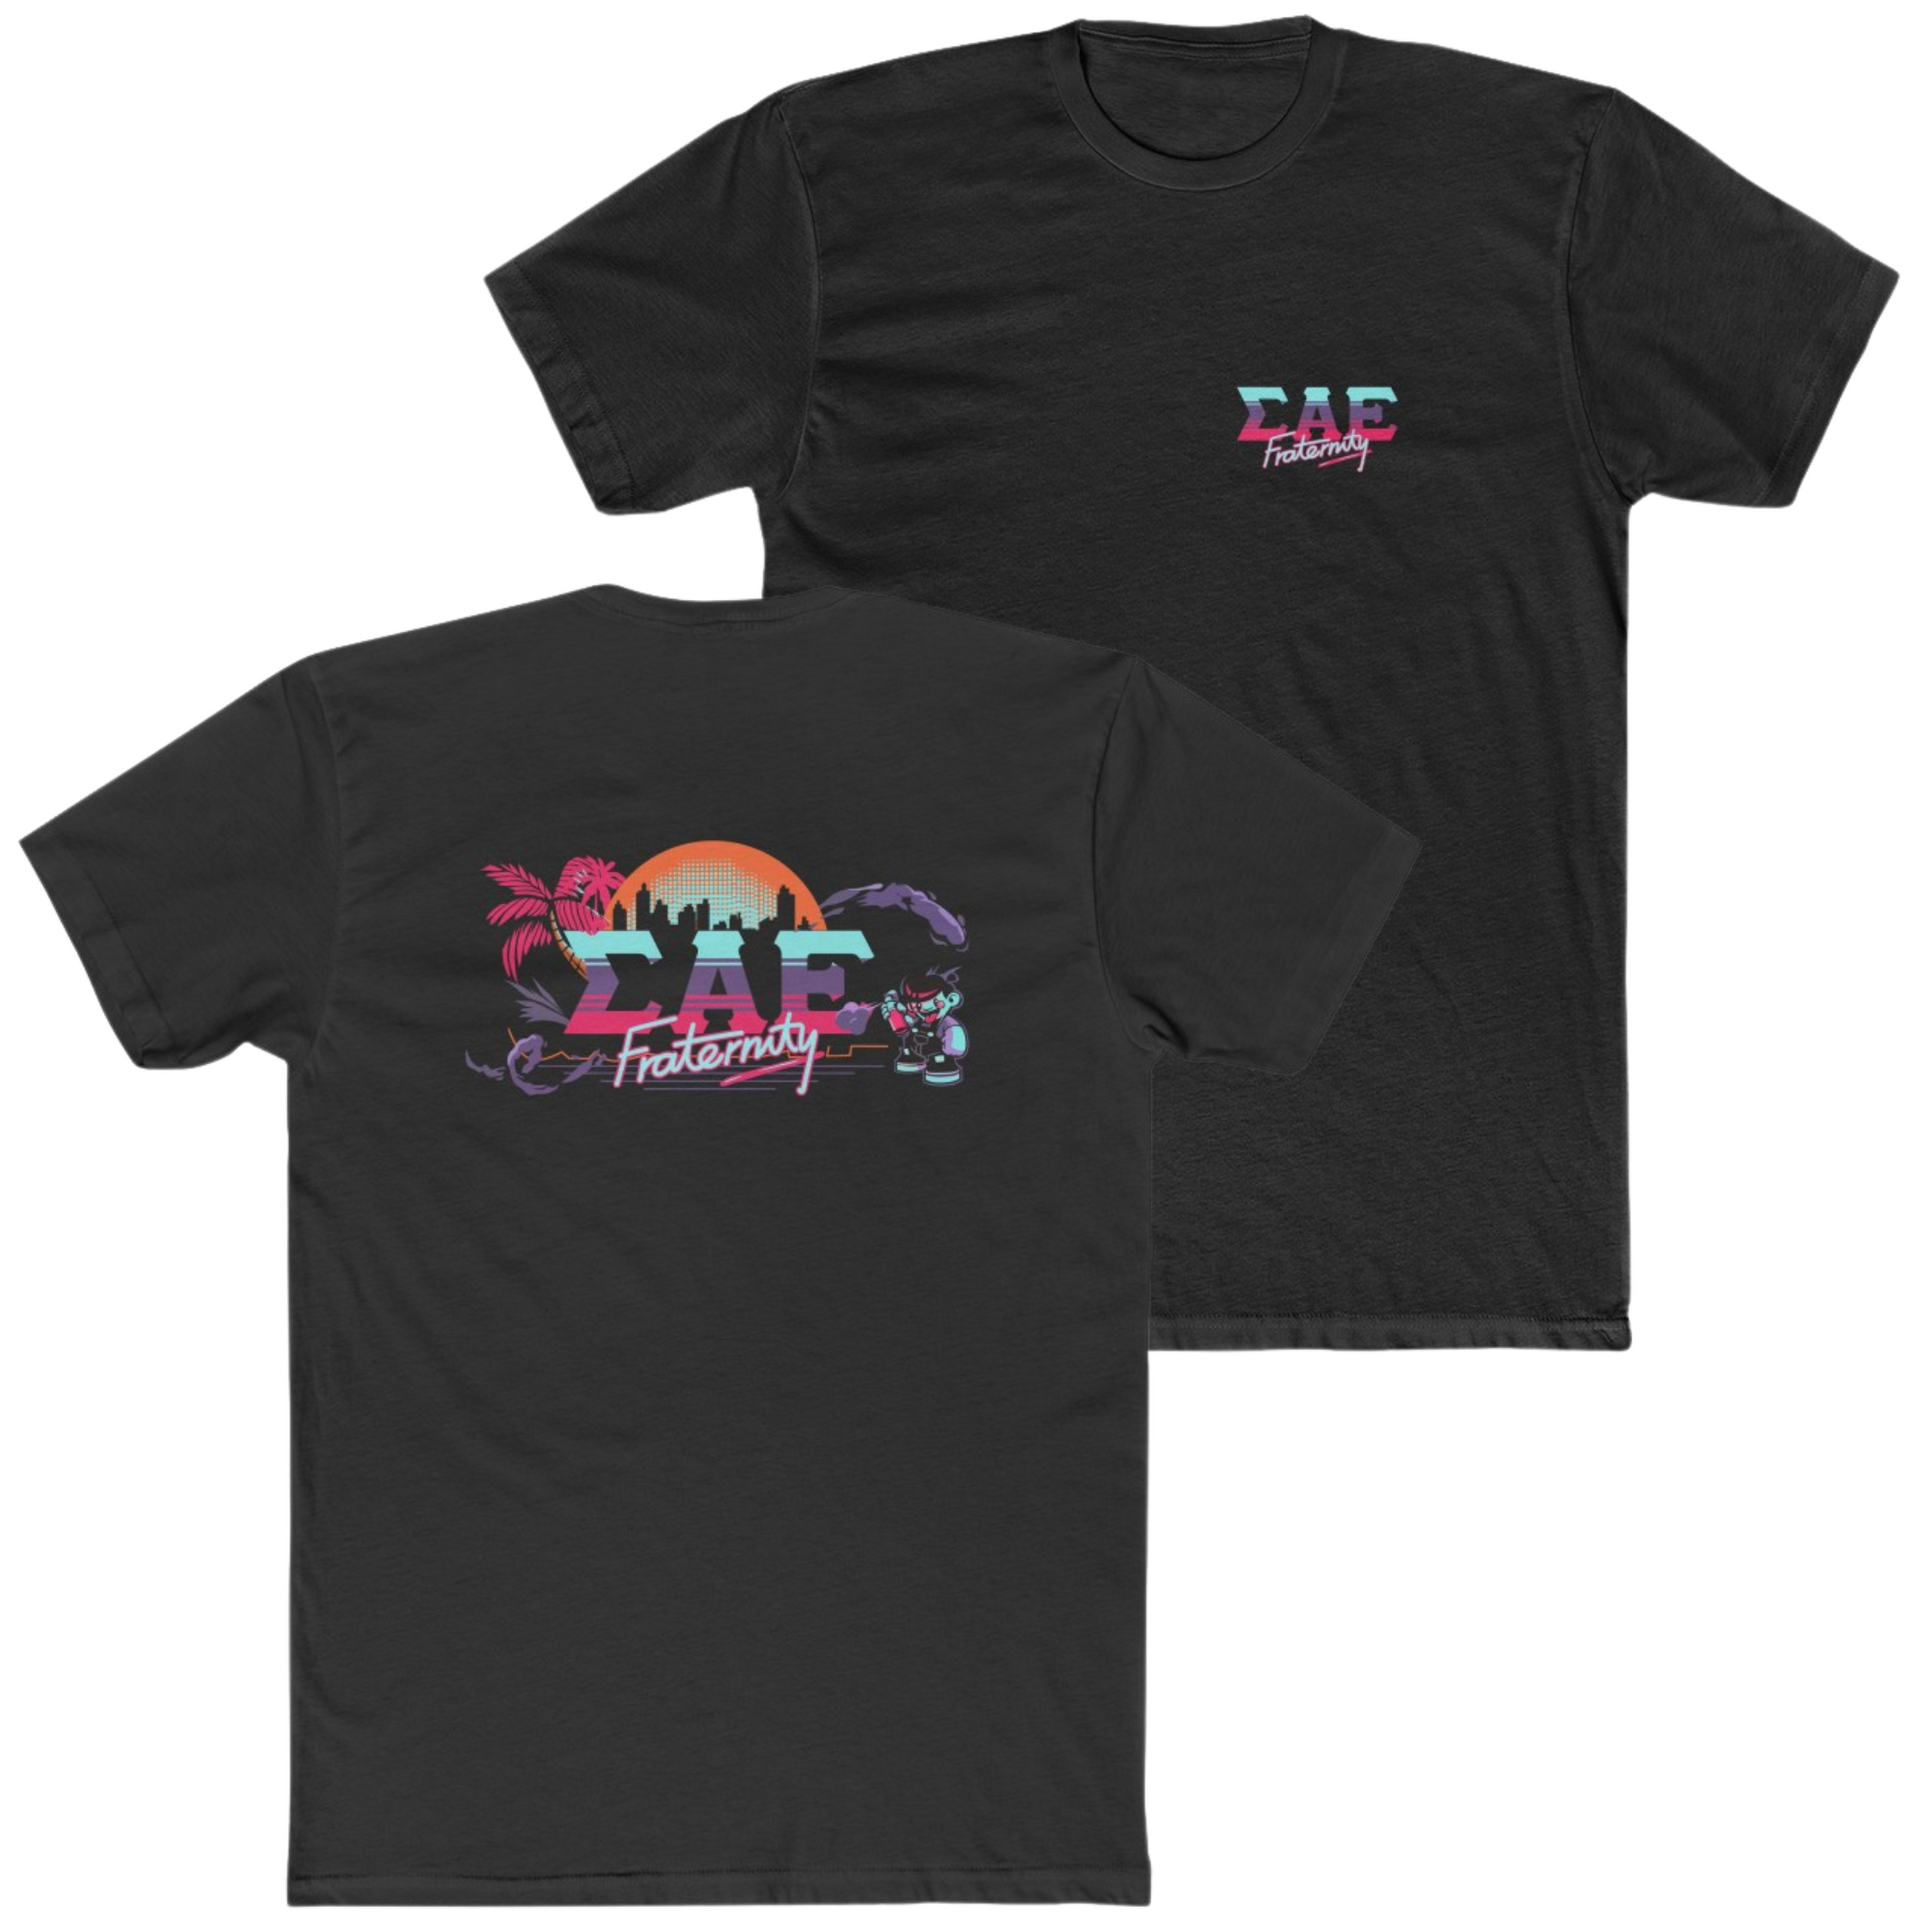 Black Sigma Alpha Epsilon Graphic T-Shirt | Jump Street | Sigma Alpha Epsilon Clothing and Merchandise